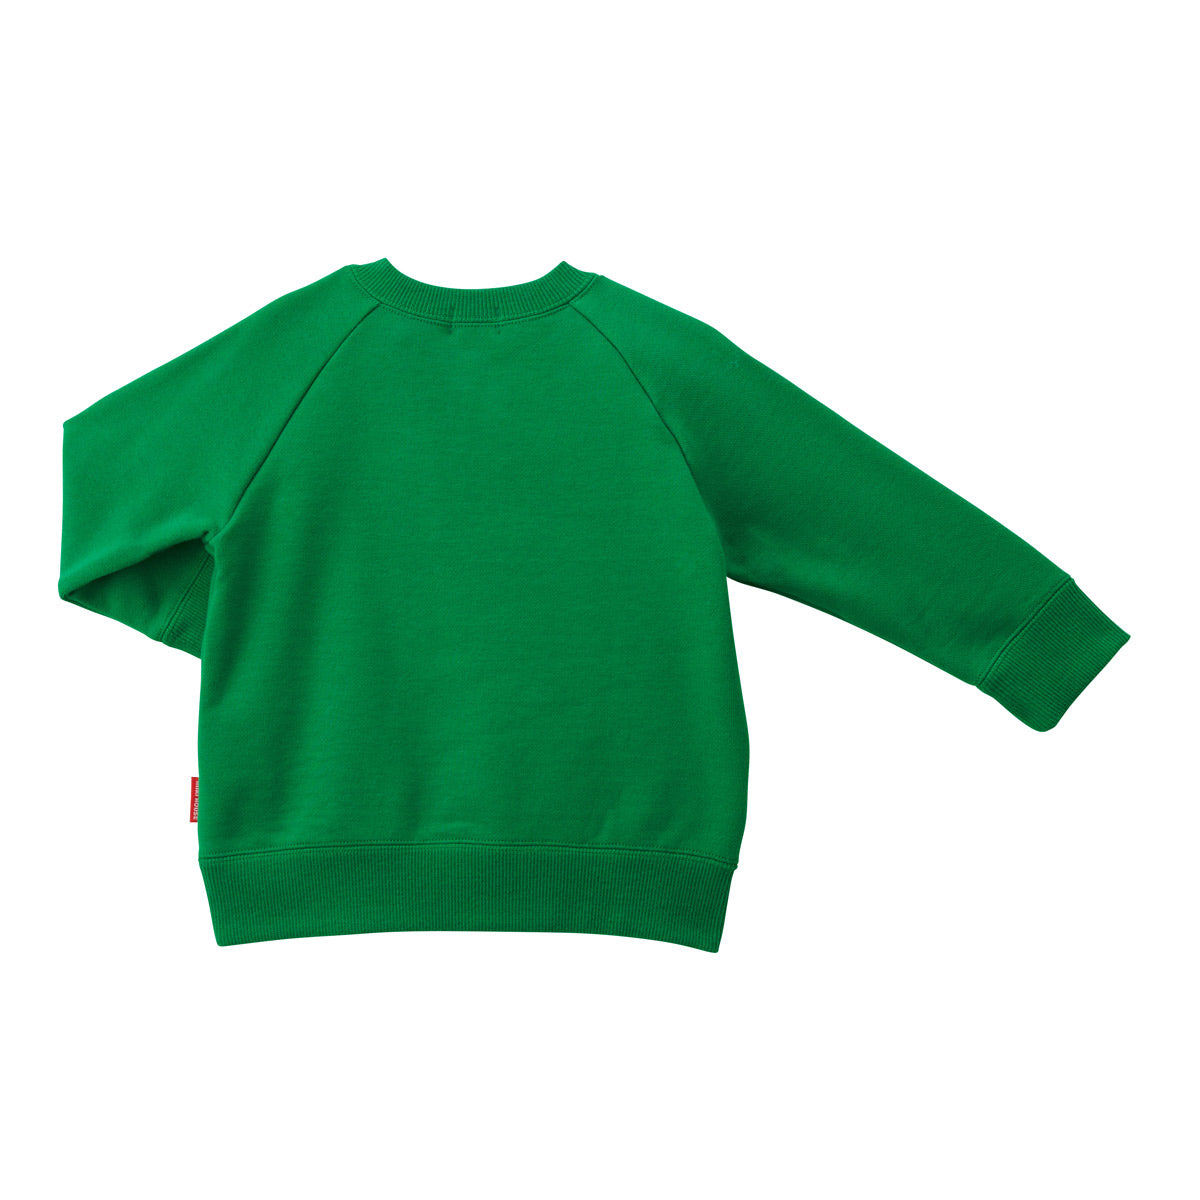 MIKI HOUSE Embroidered Logo Sweatshirt Classic